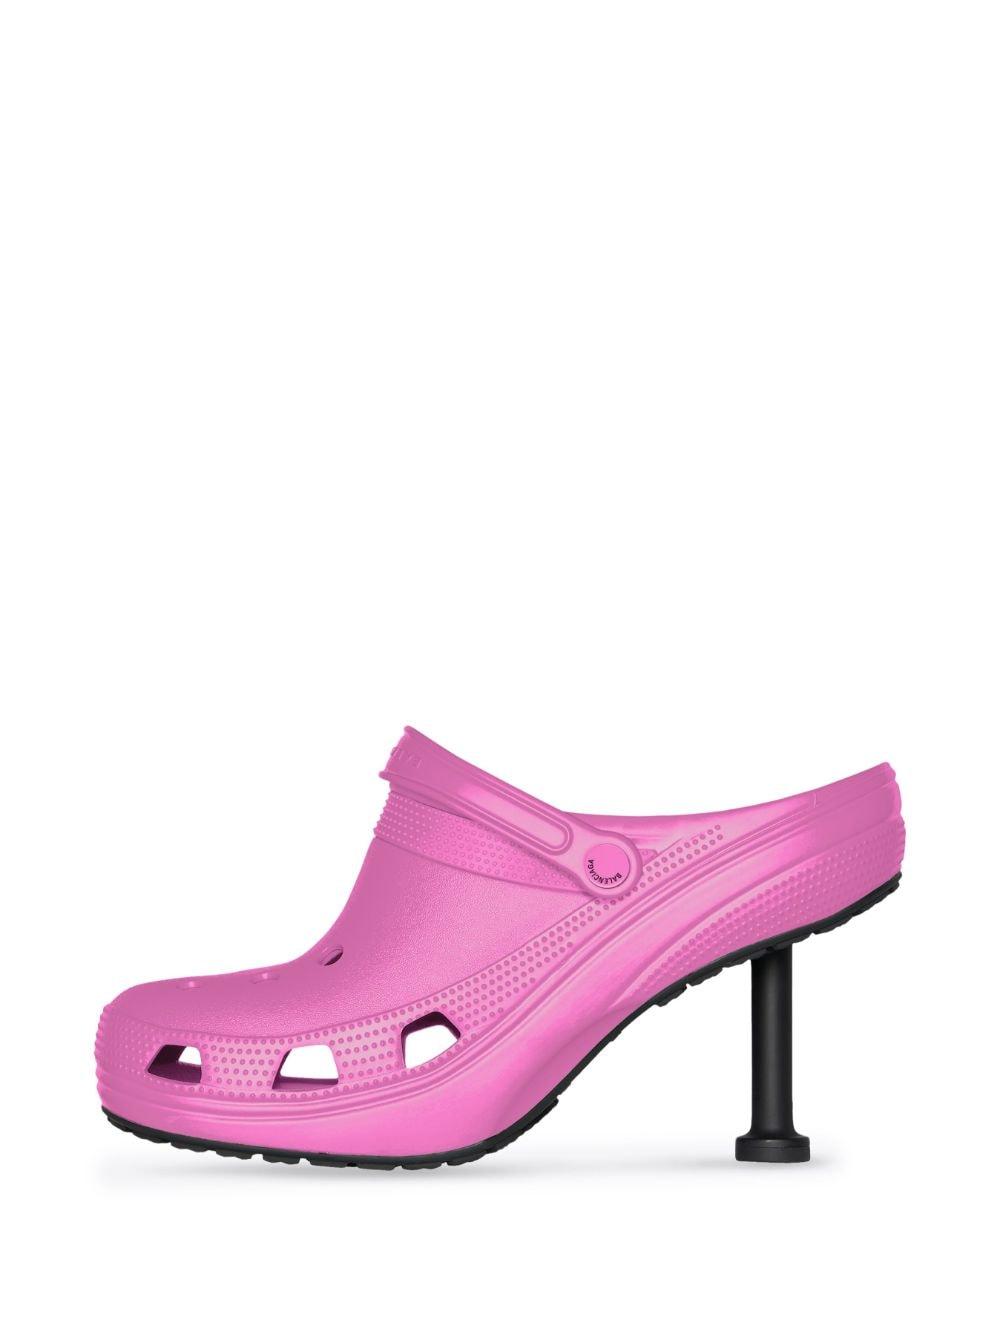 Balenciaga X Crocs Madame 80mm Pumps in Pink | Lyst